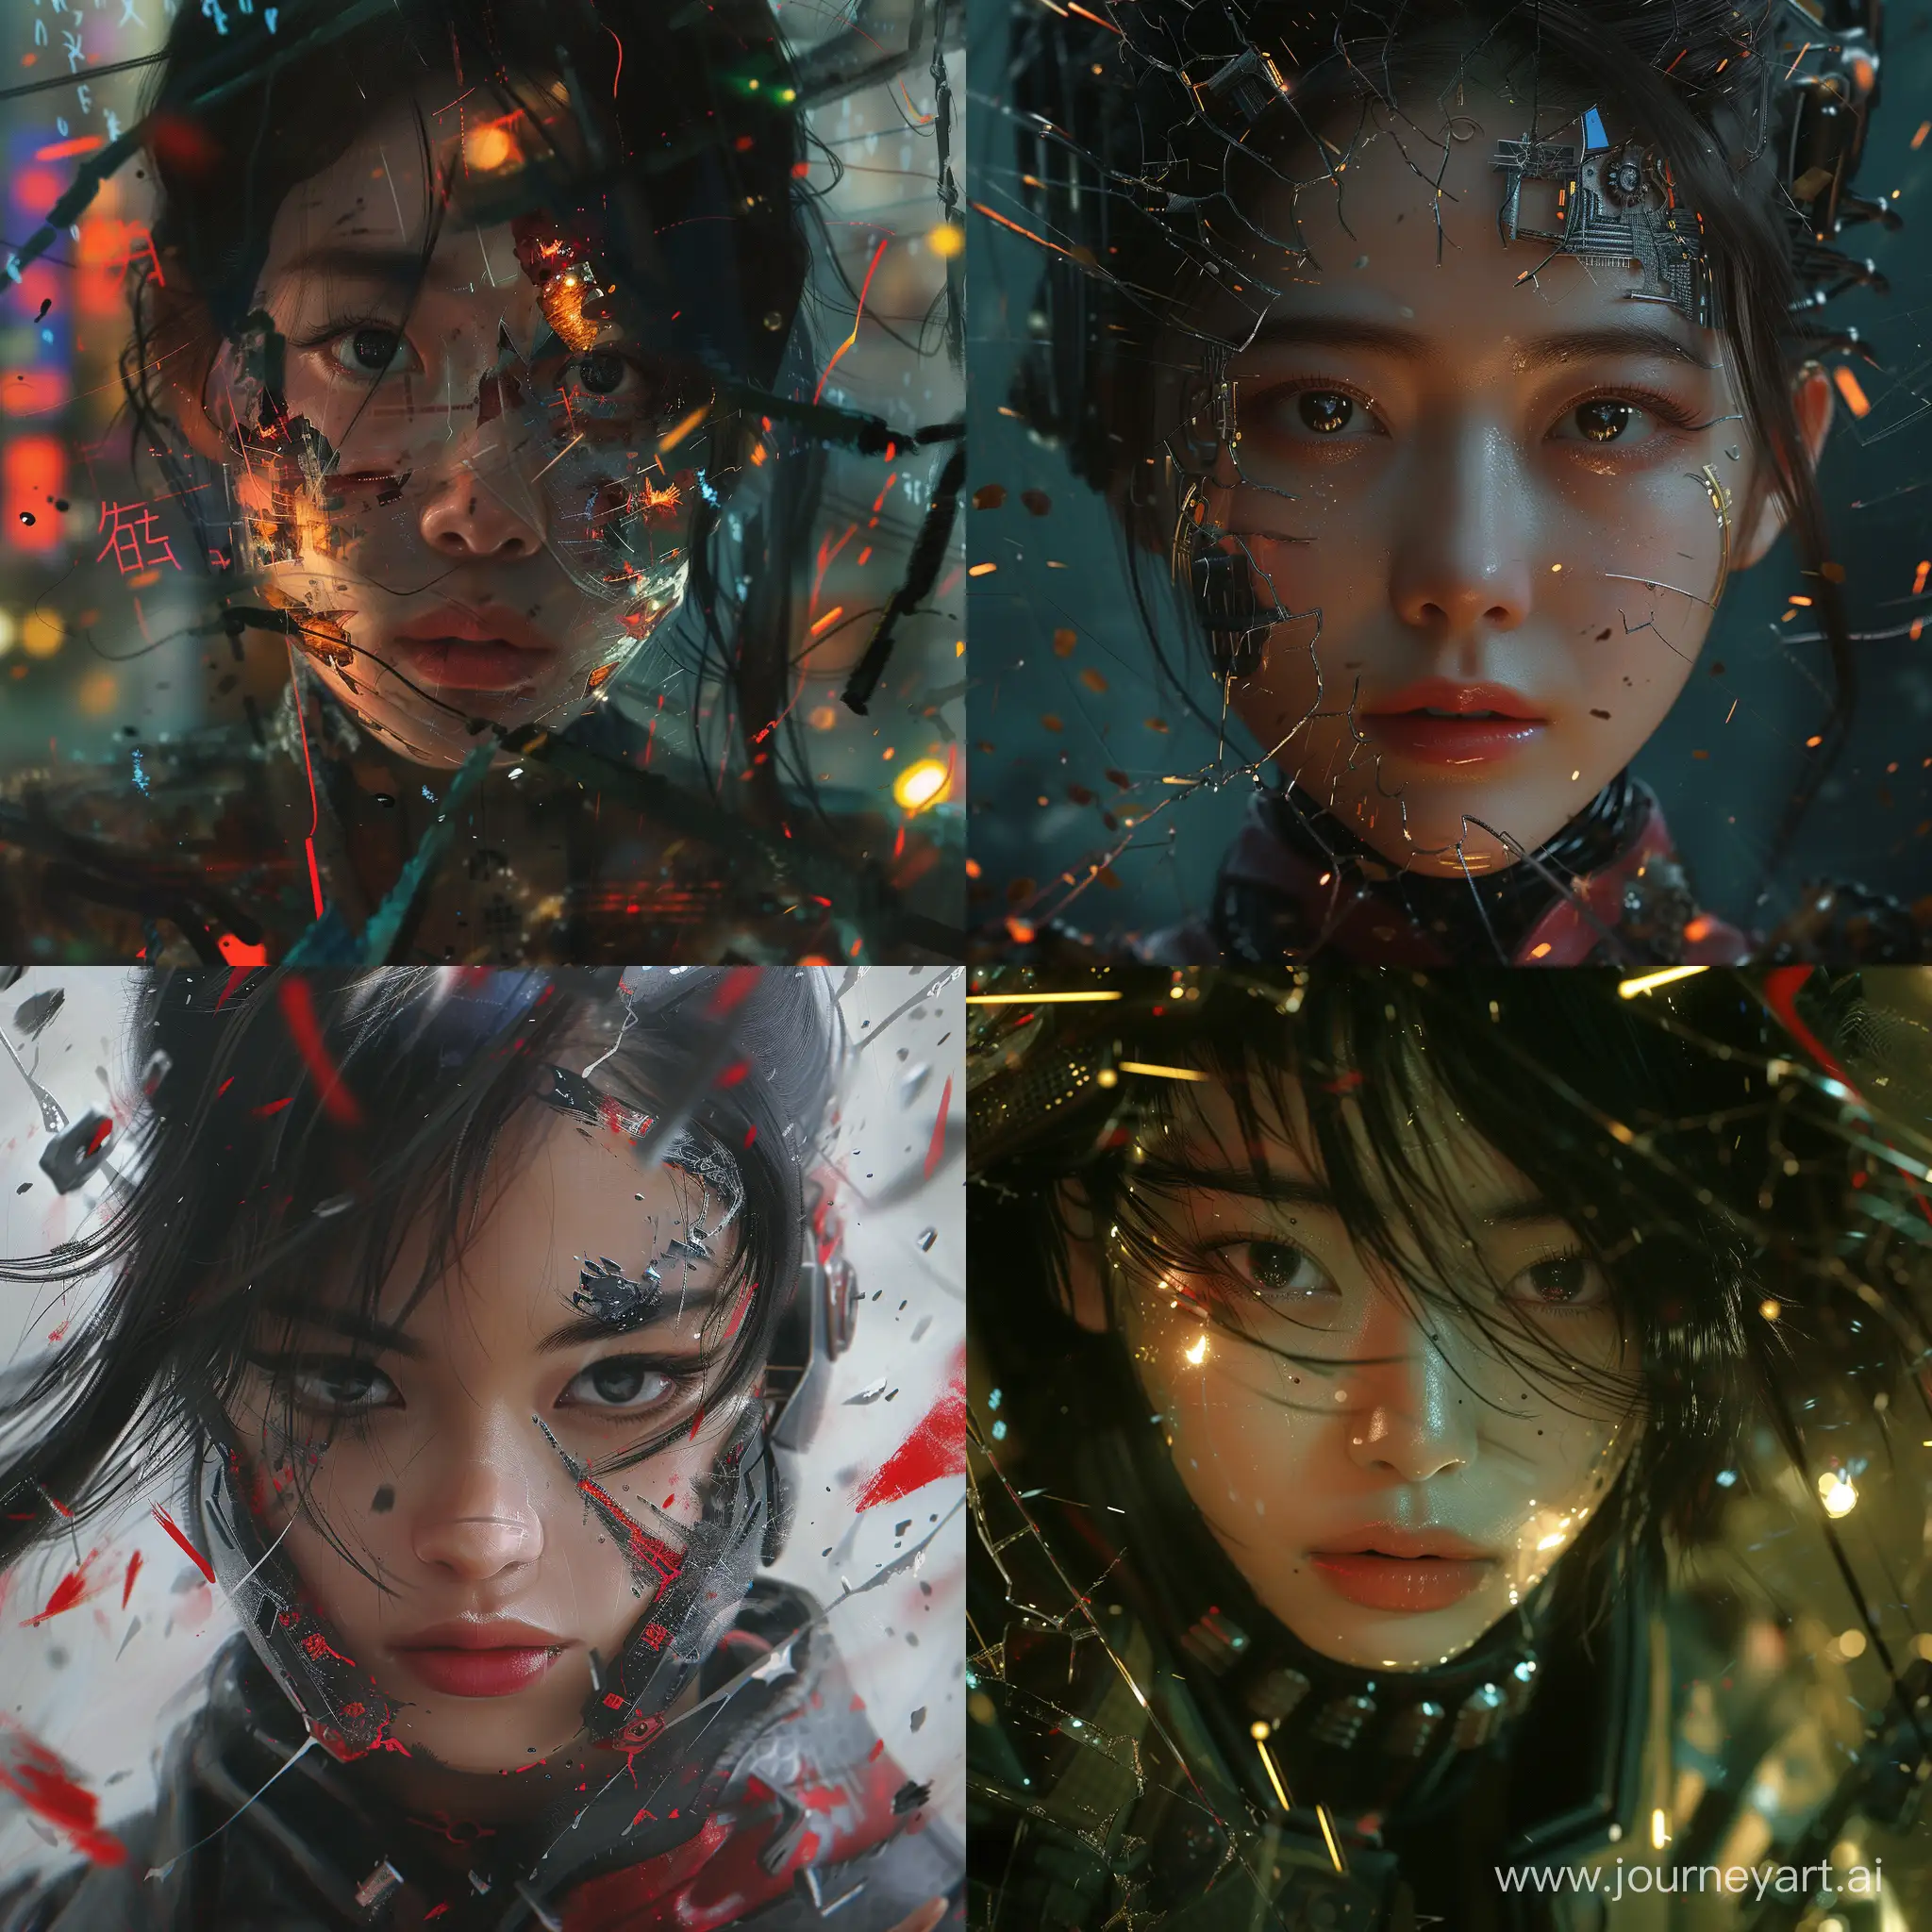 Dynamic-Cyberpunk-Fusion-Asian-Girl-Breaking-Boundaries-with-Intense-Emotion